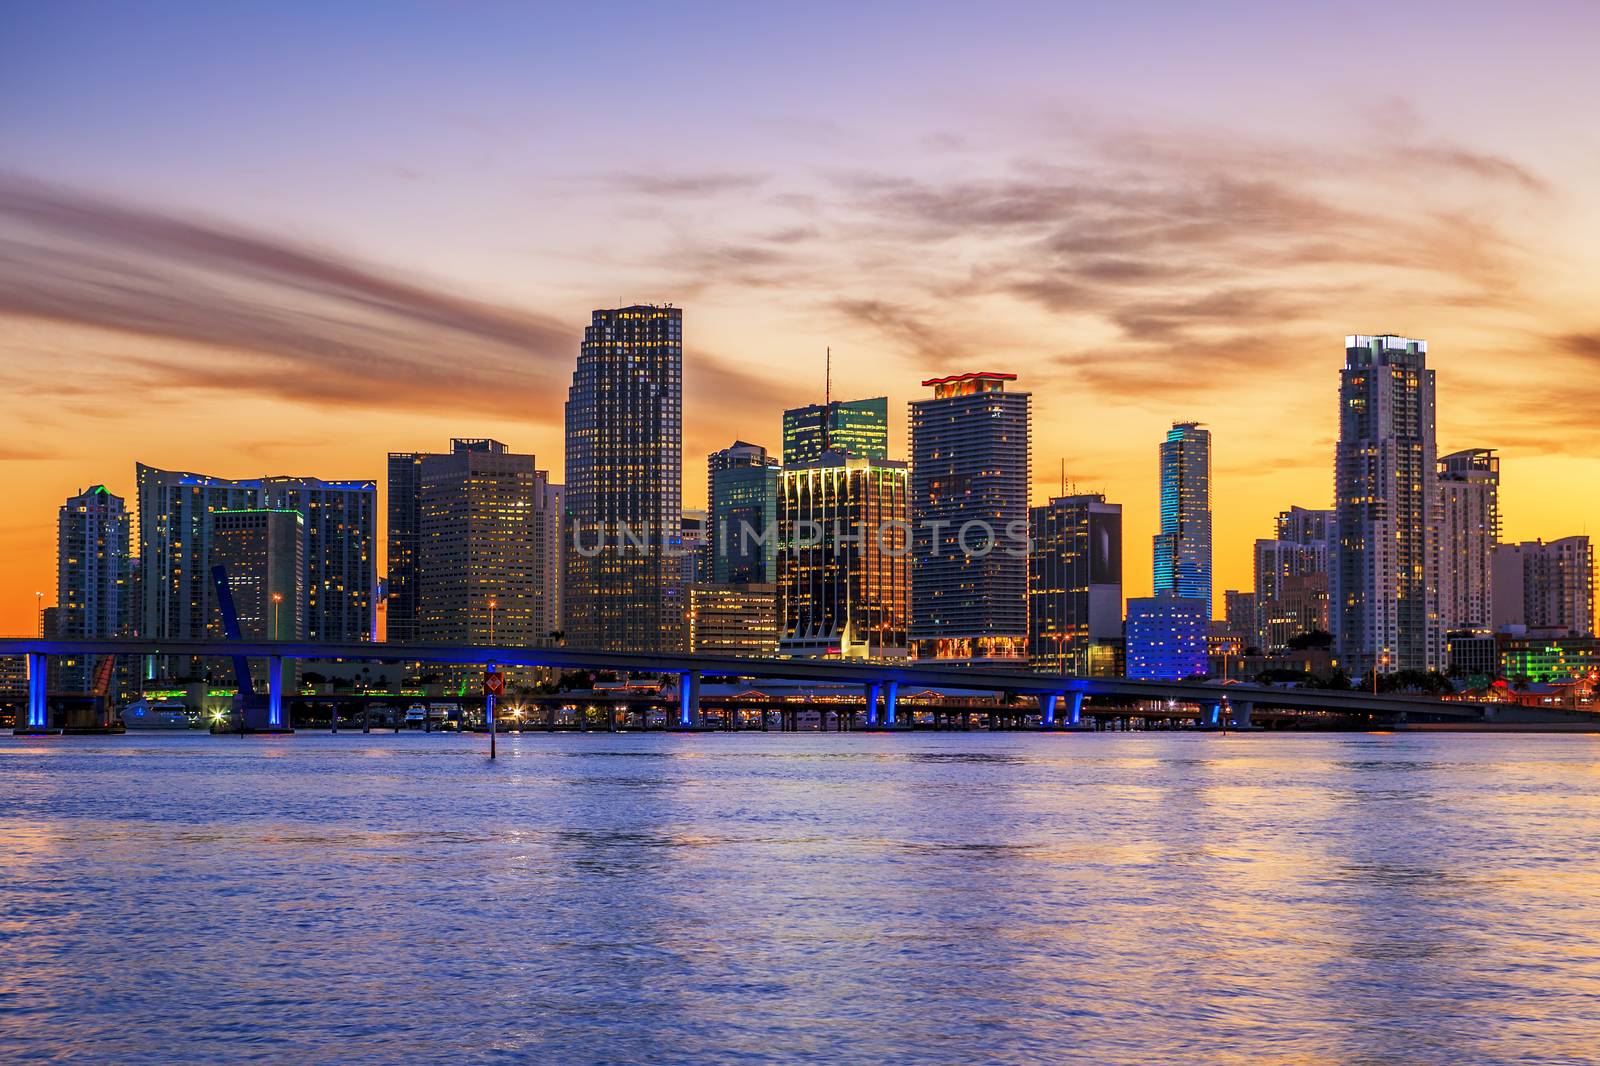 Famous cIty of Miami, Florida, summer sunset